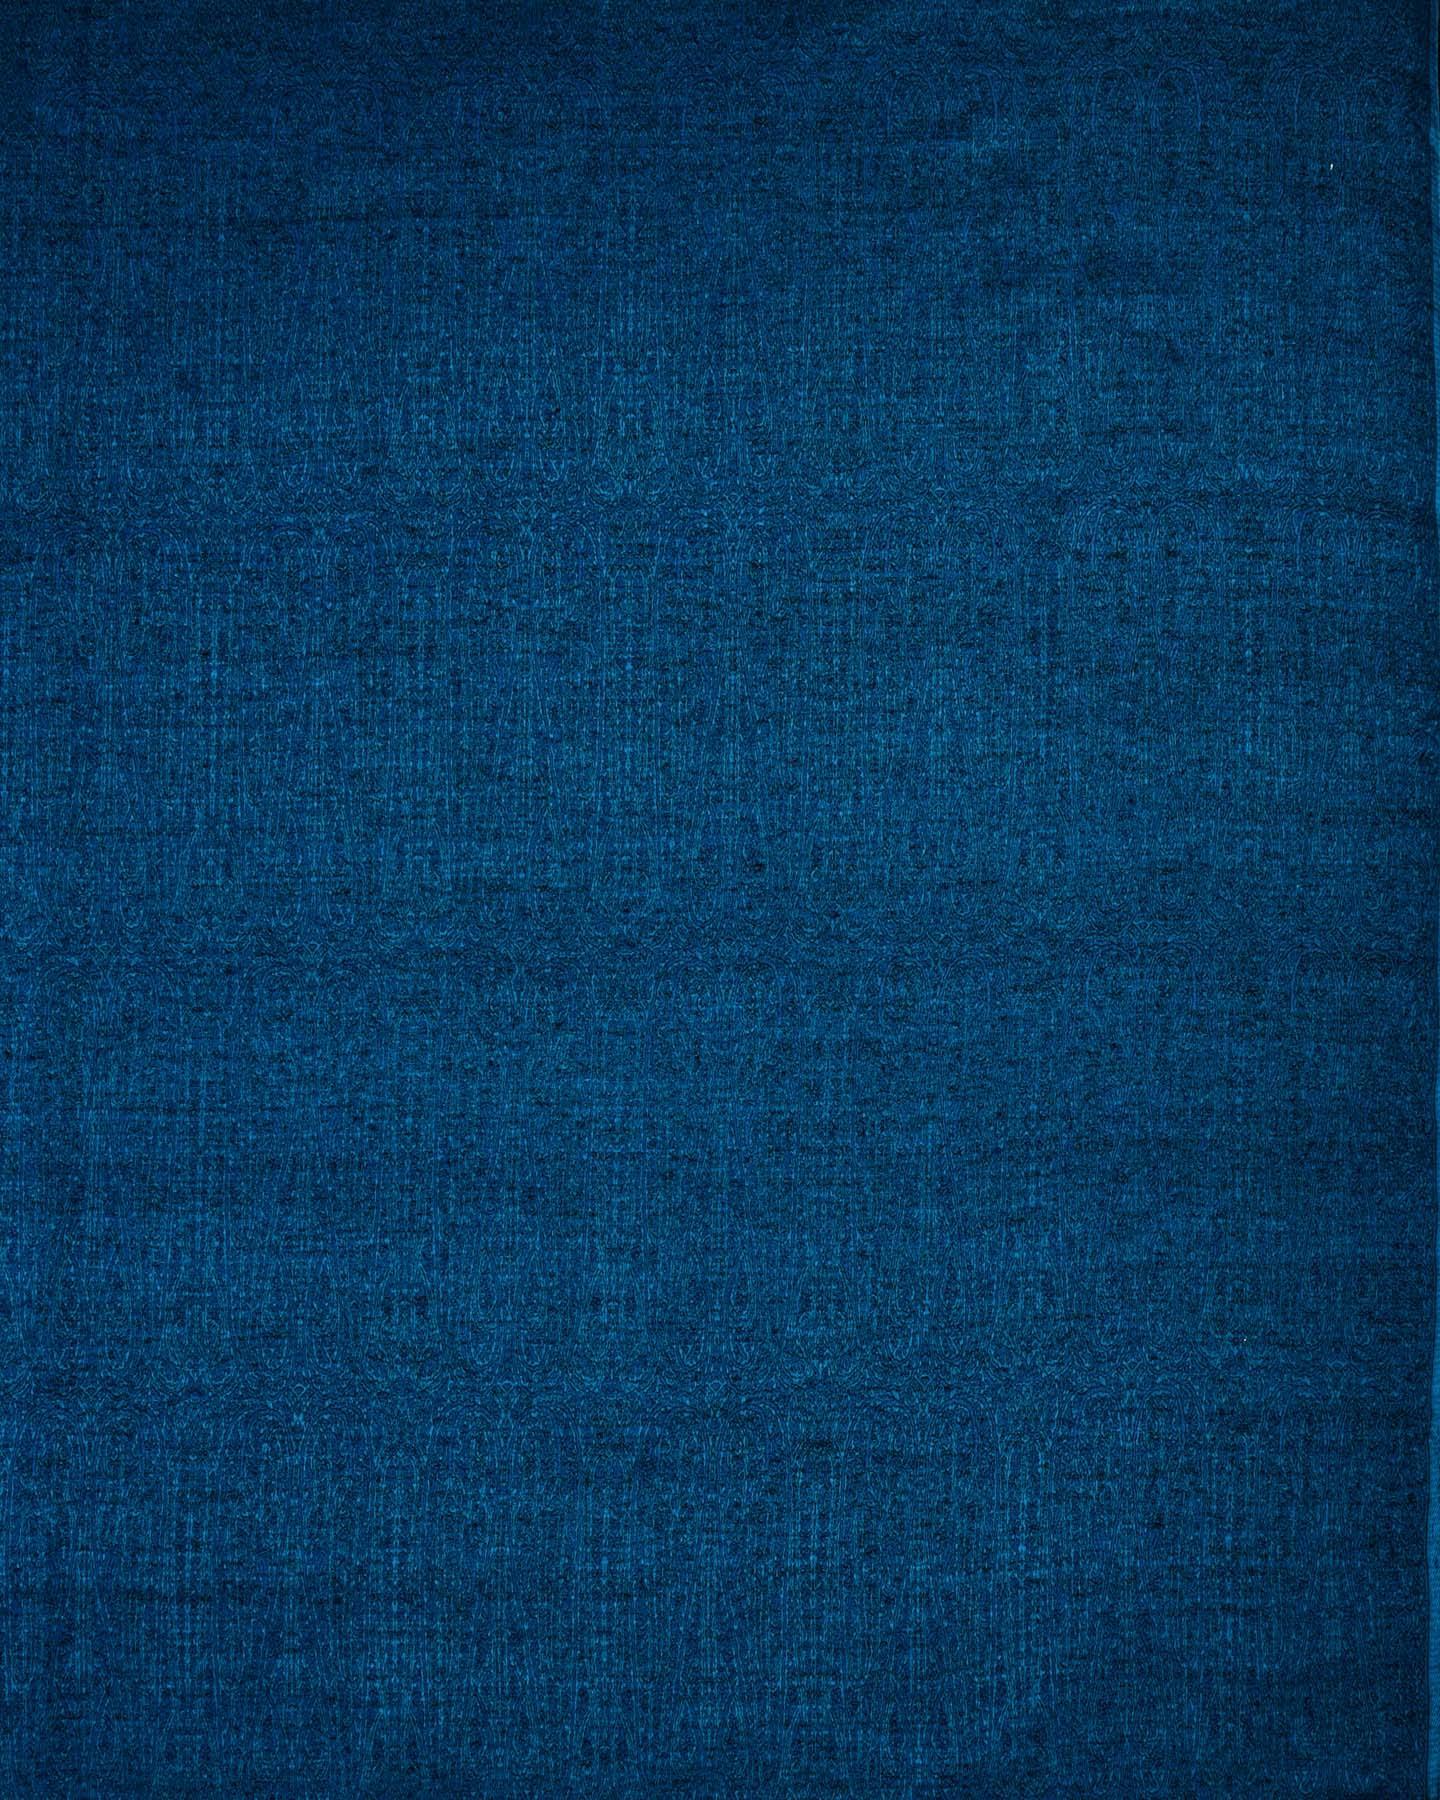 Prussian Blue Banarasi Alfi Long Paisley Jamawar Handwoven Silk-wool Shawl - By HolyWeaves, Benares